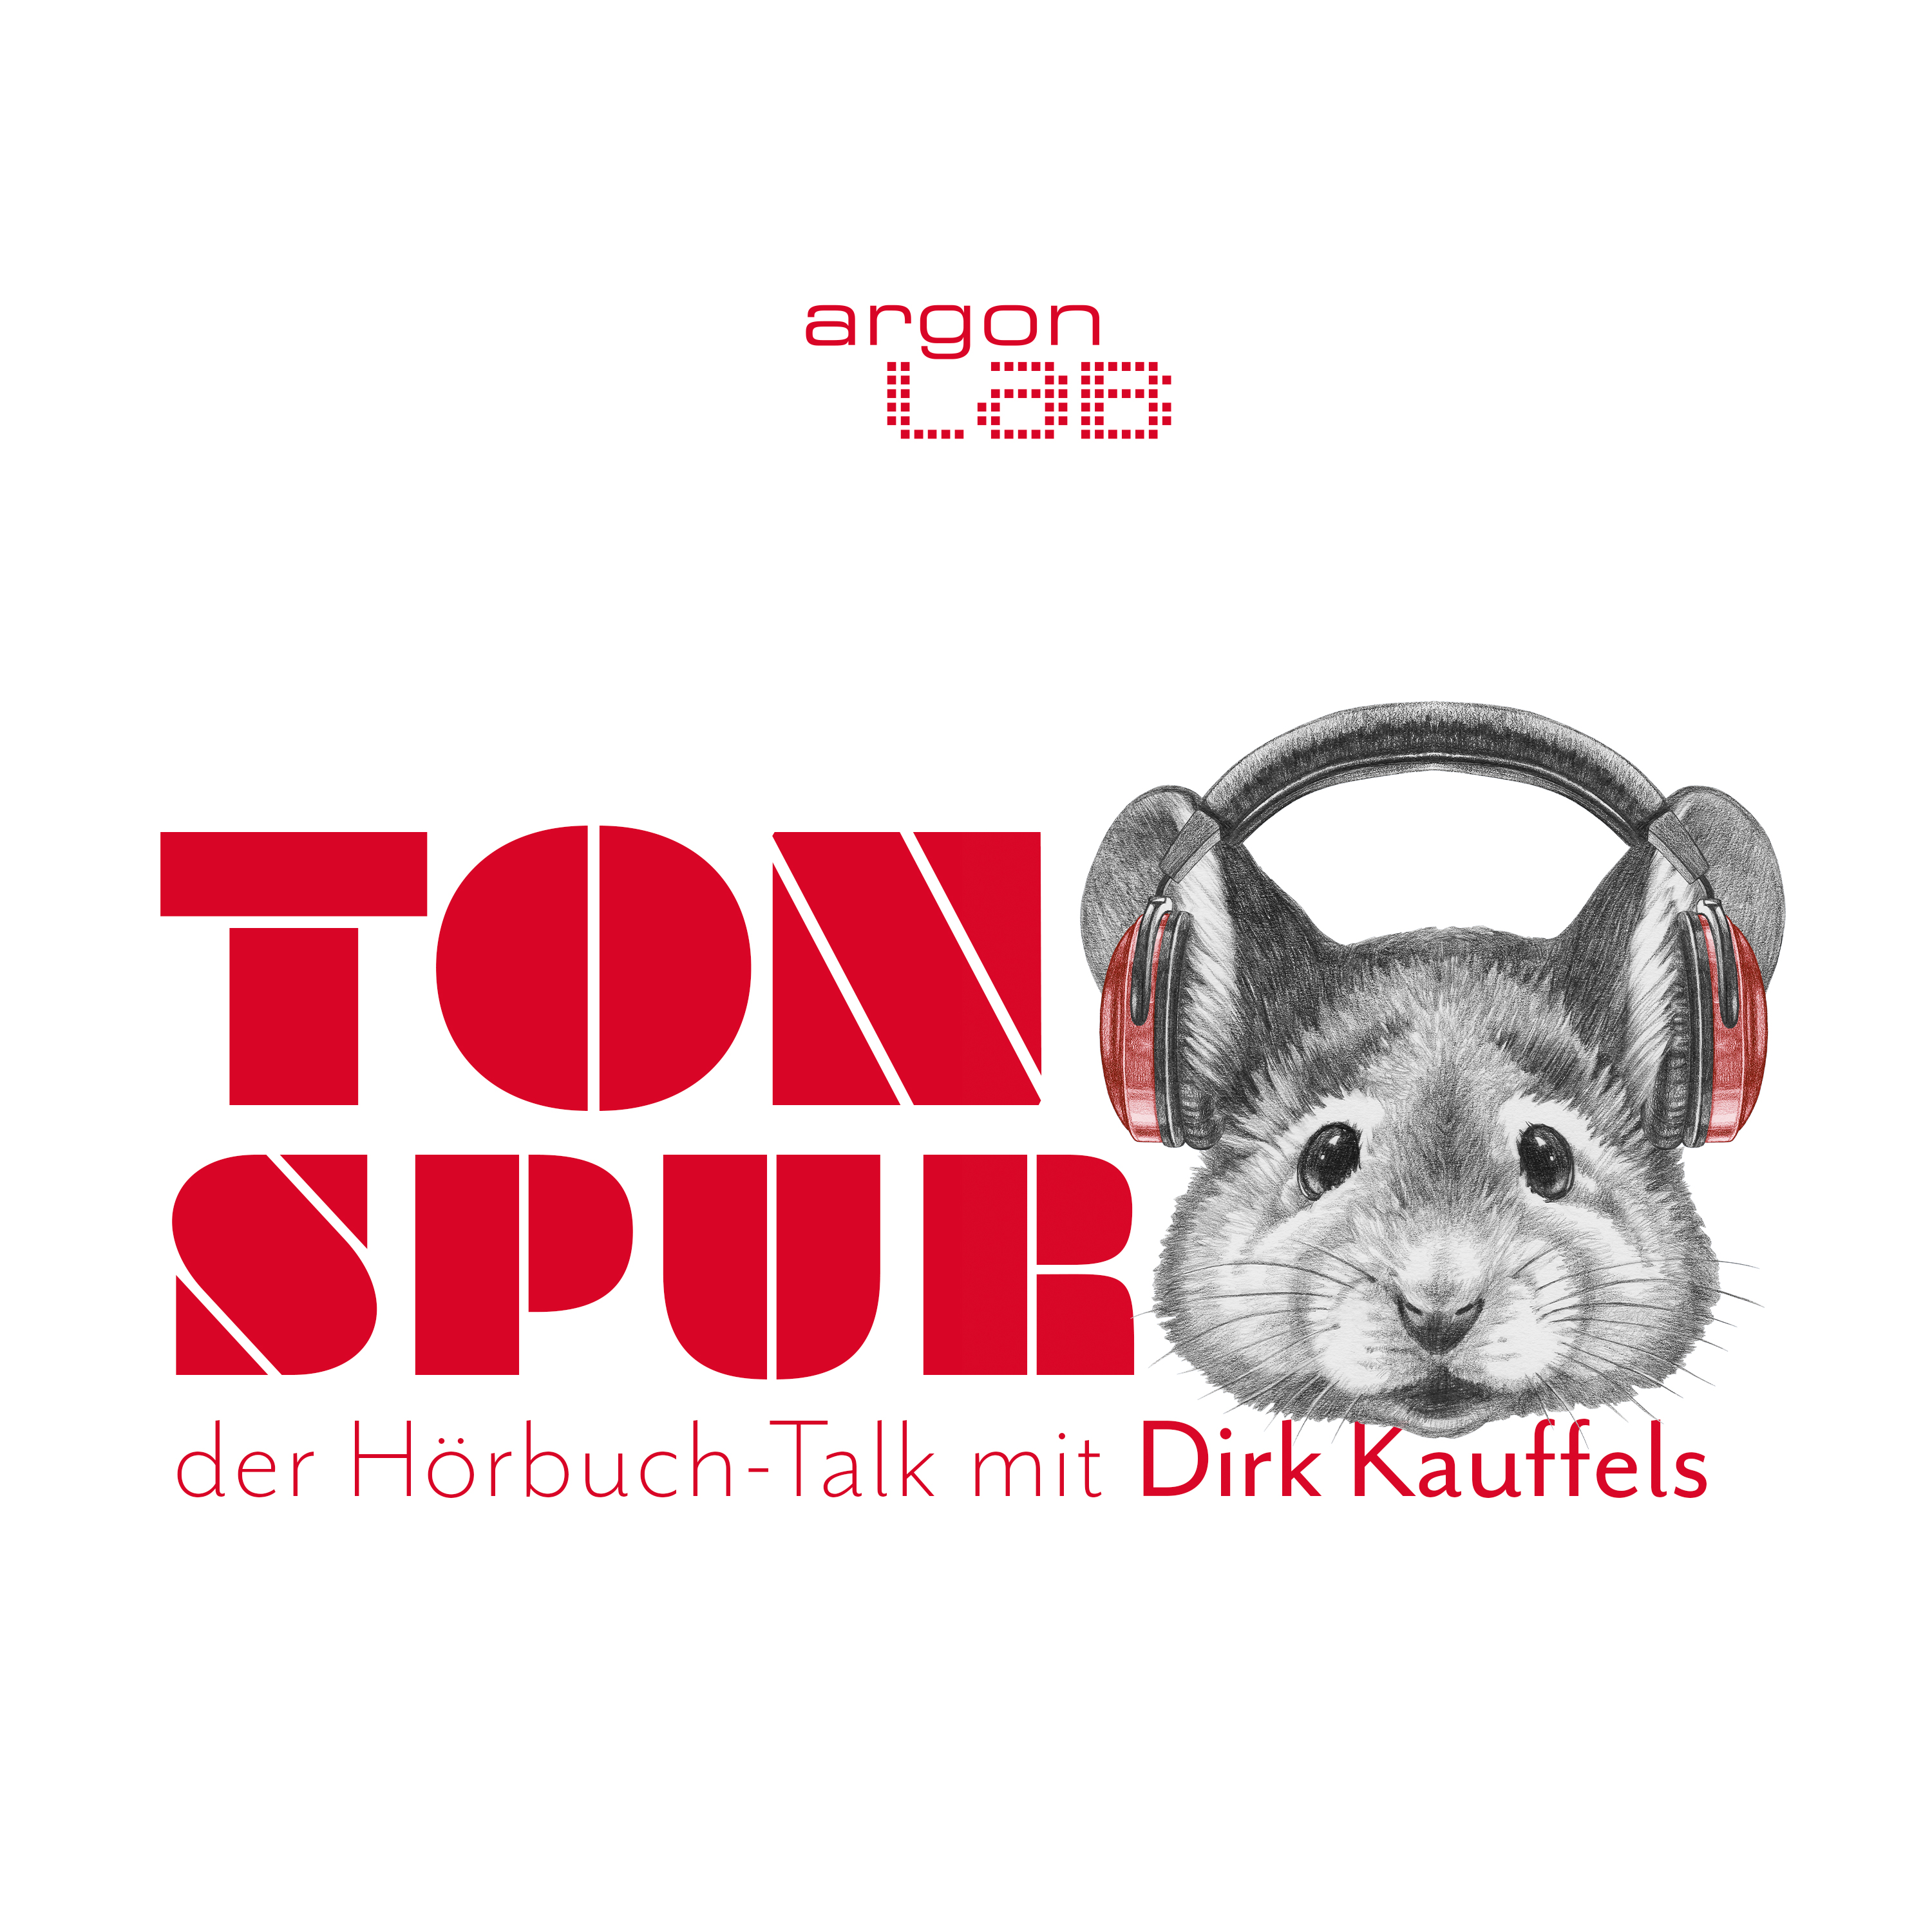 Tonspur – der Hörbuch-Talk mit Dirk Kauffels podcast show image